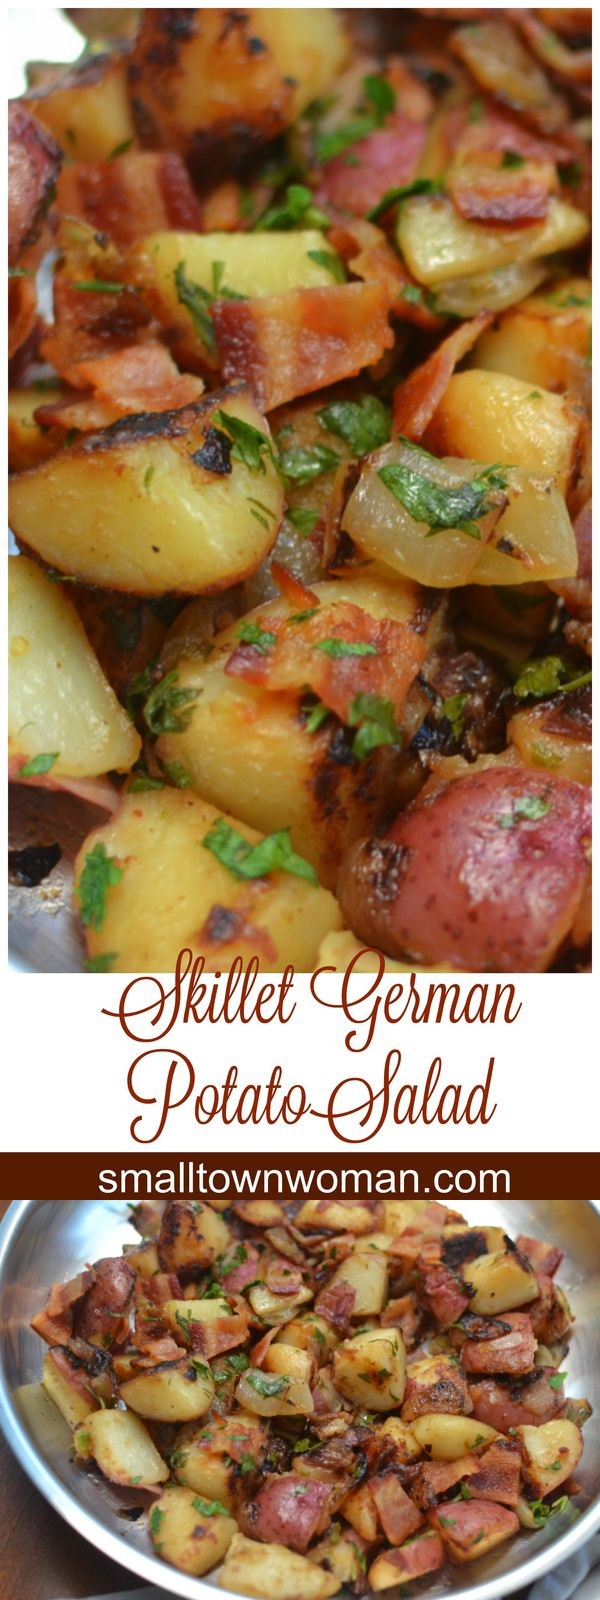 Skillet German Potato Salad